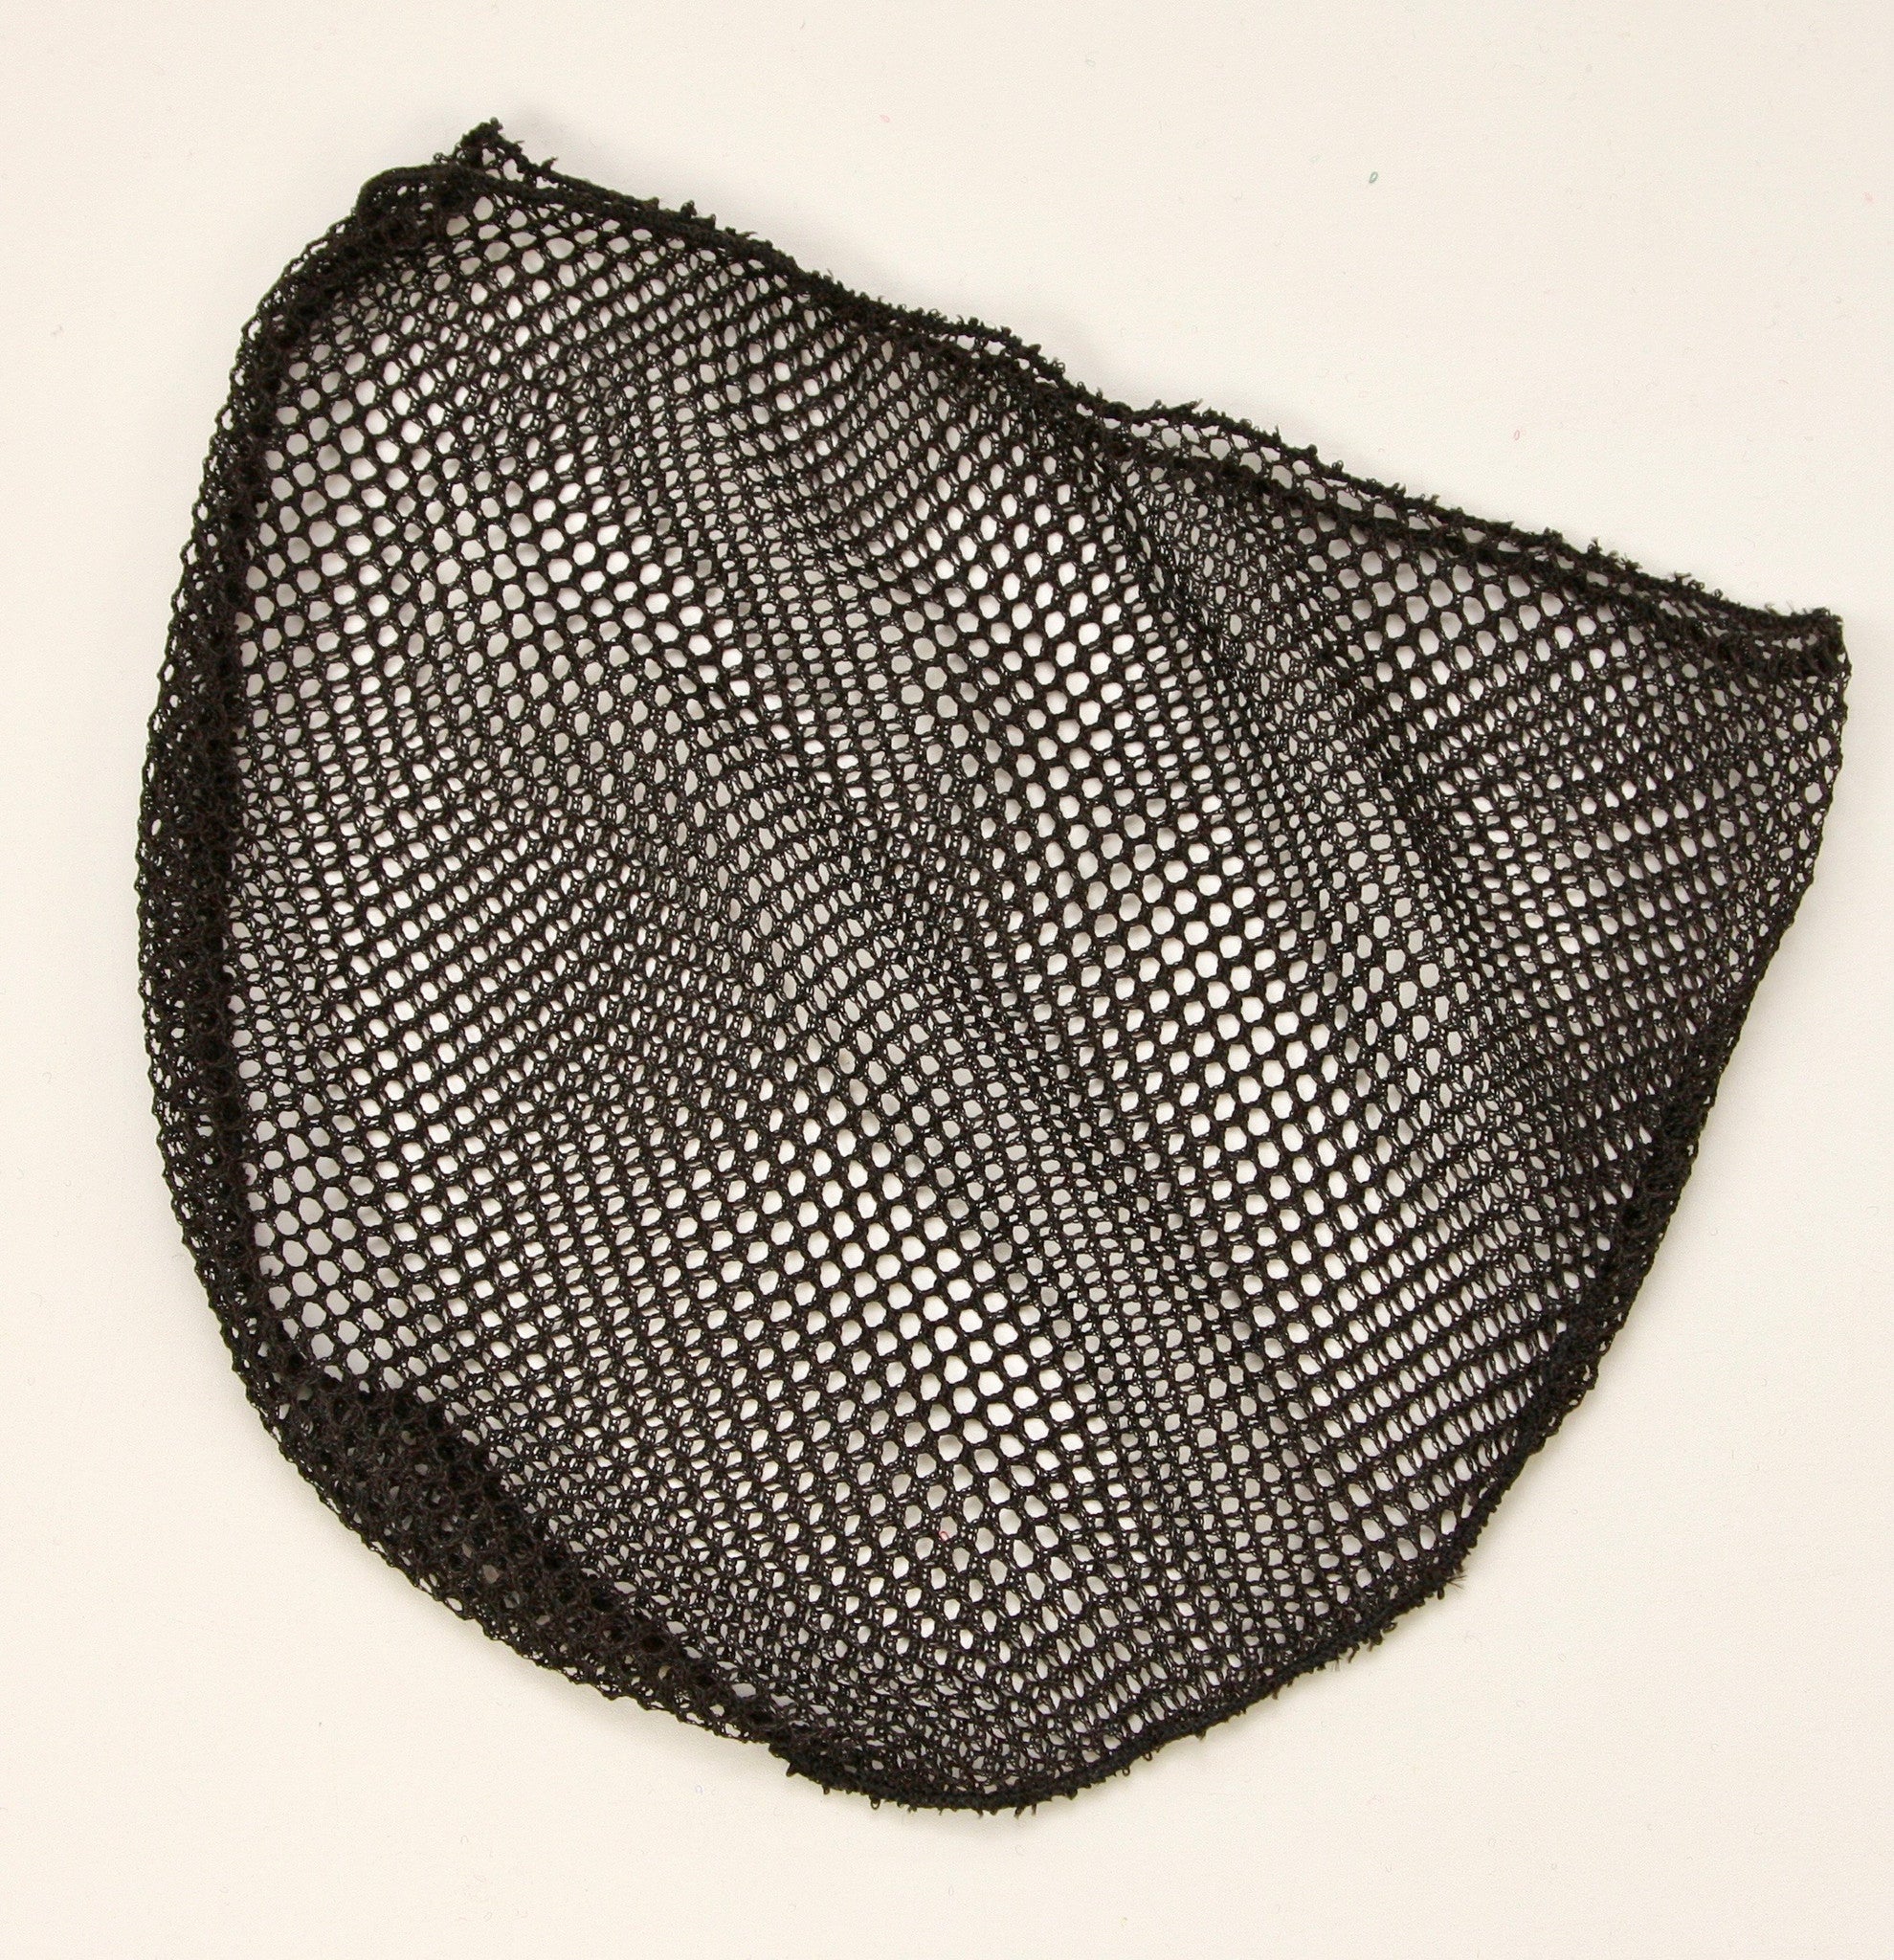 Tenkara small catch and release nylon landing net bags, USA made